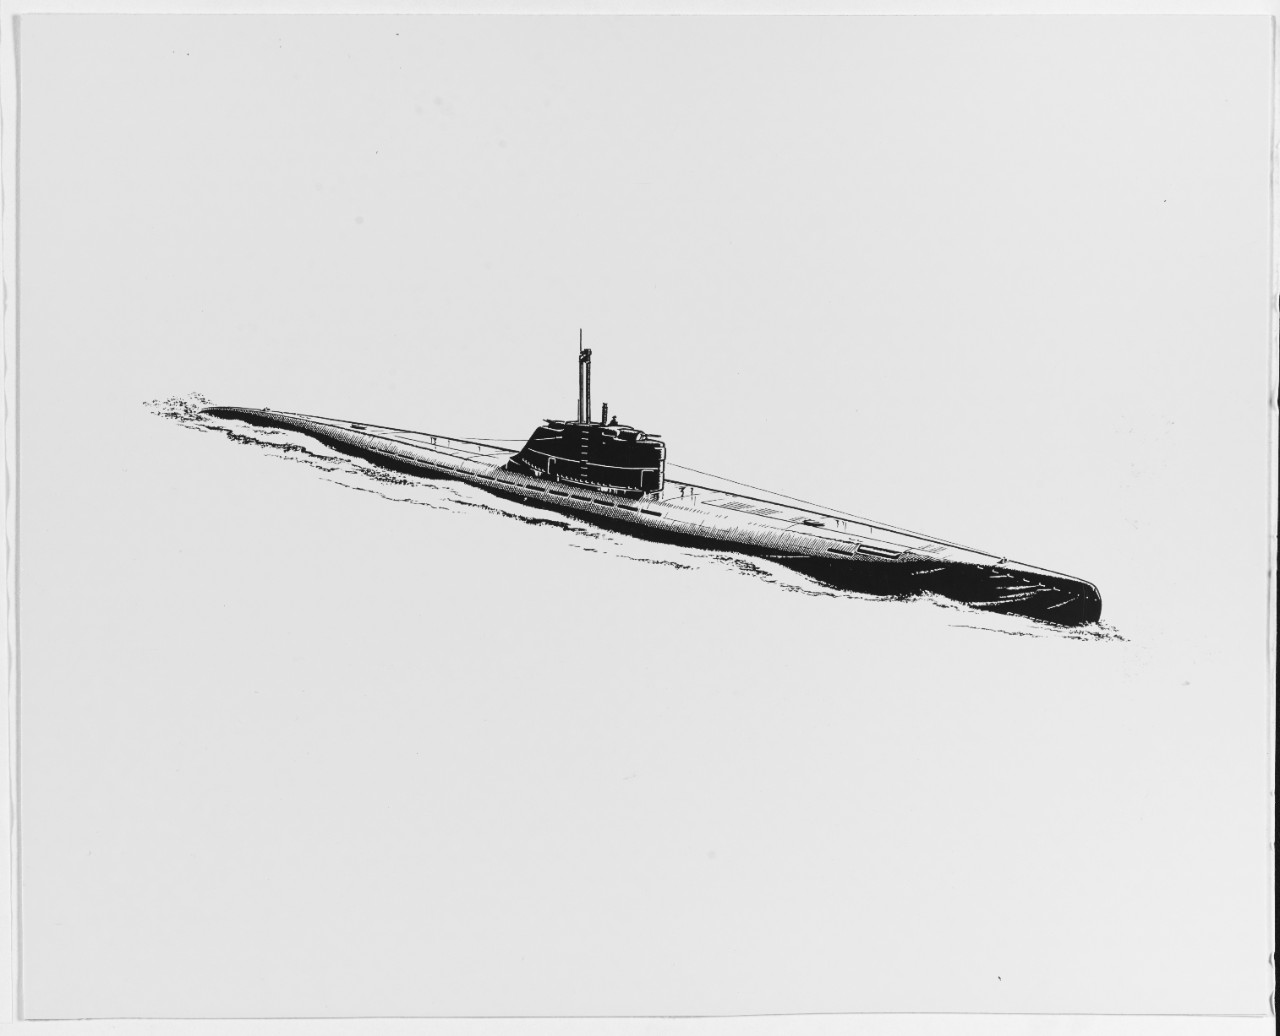 German type XXI U-boat